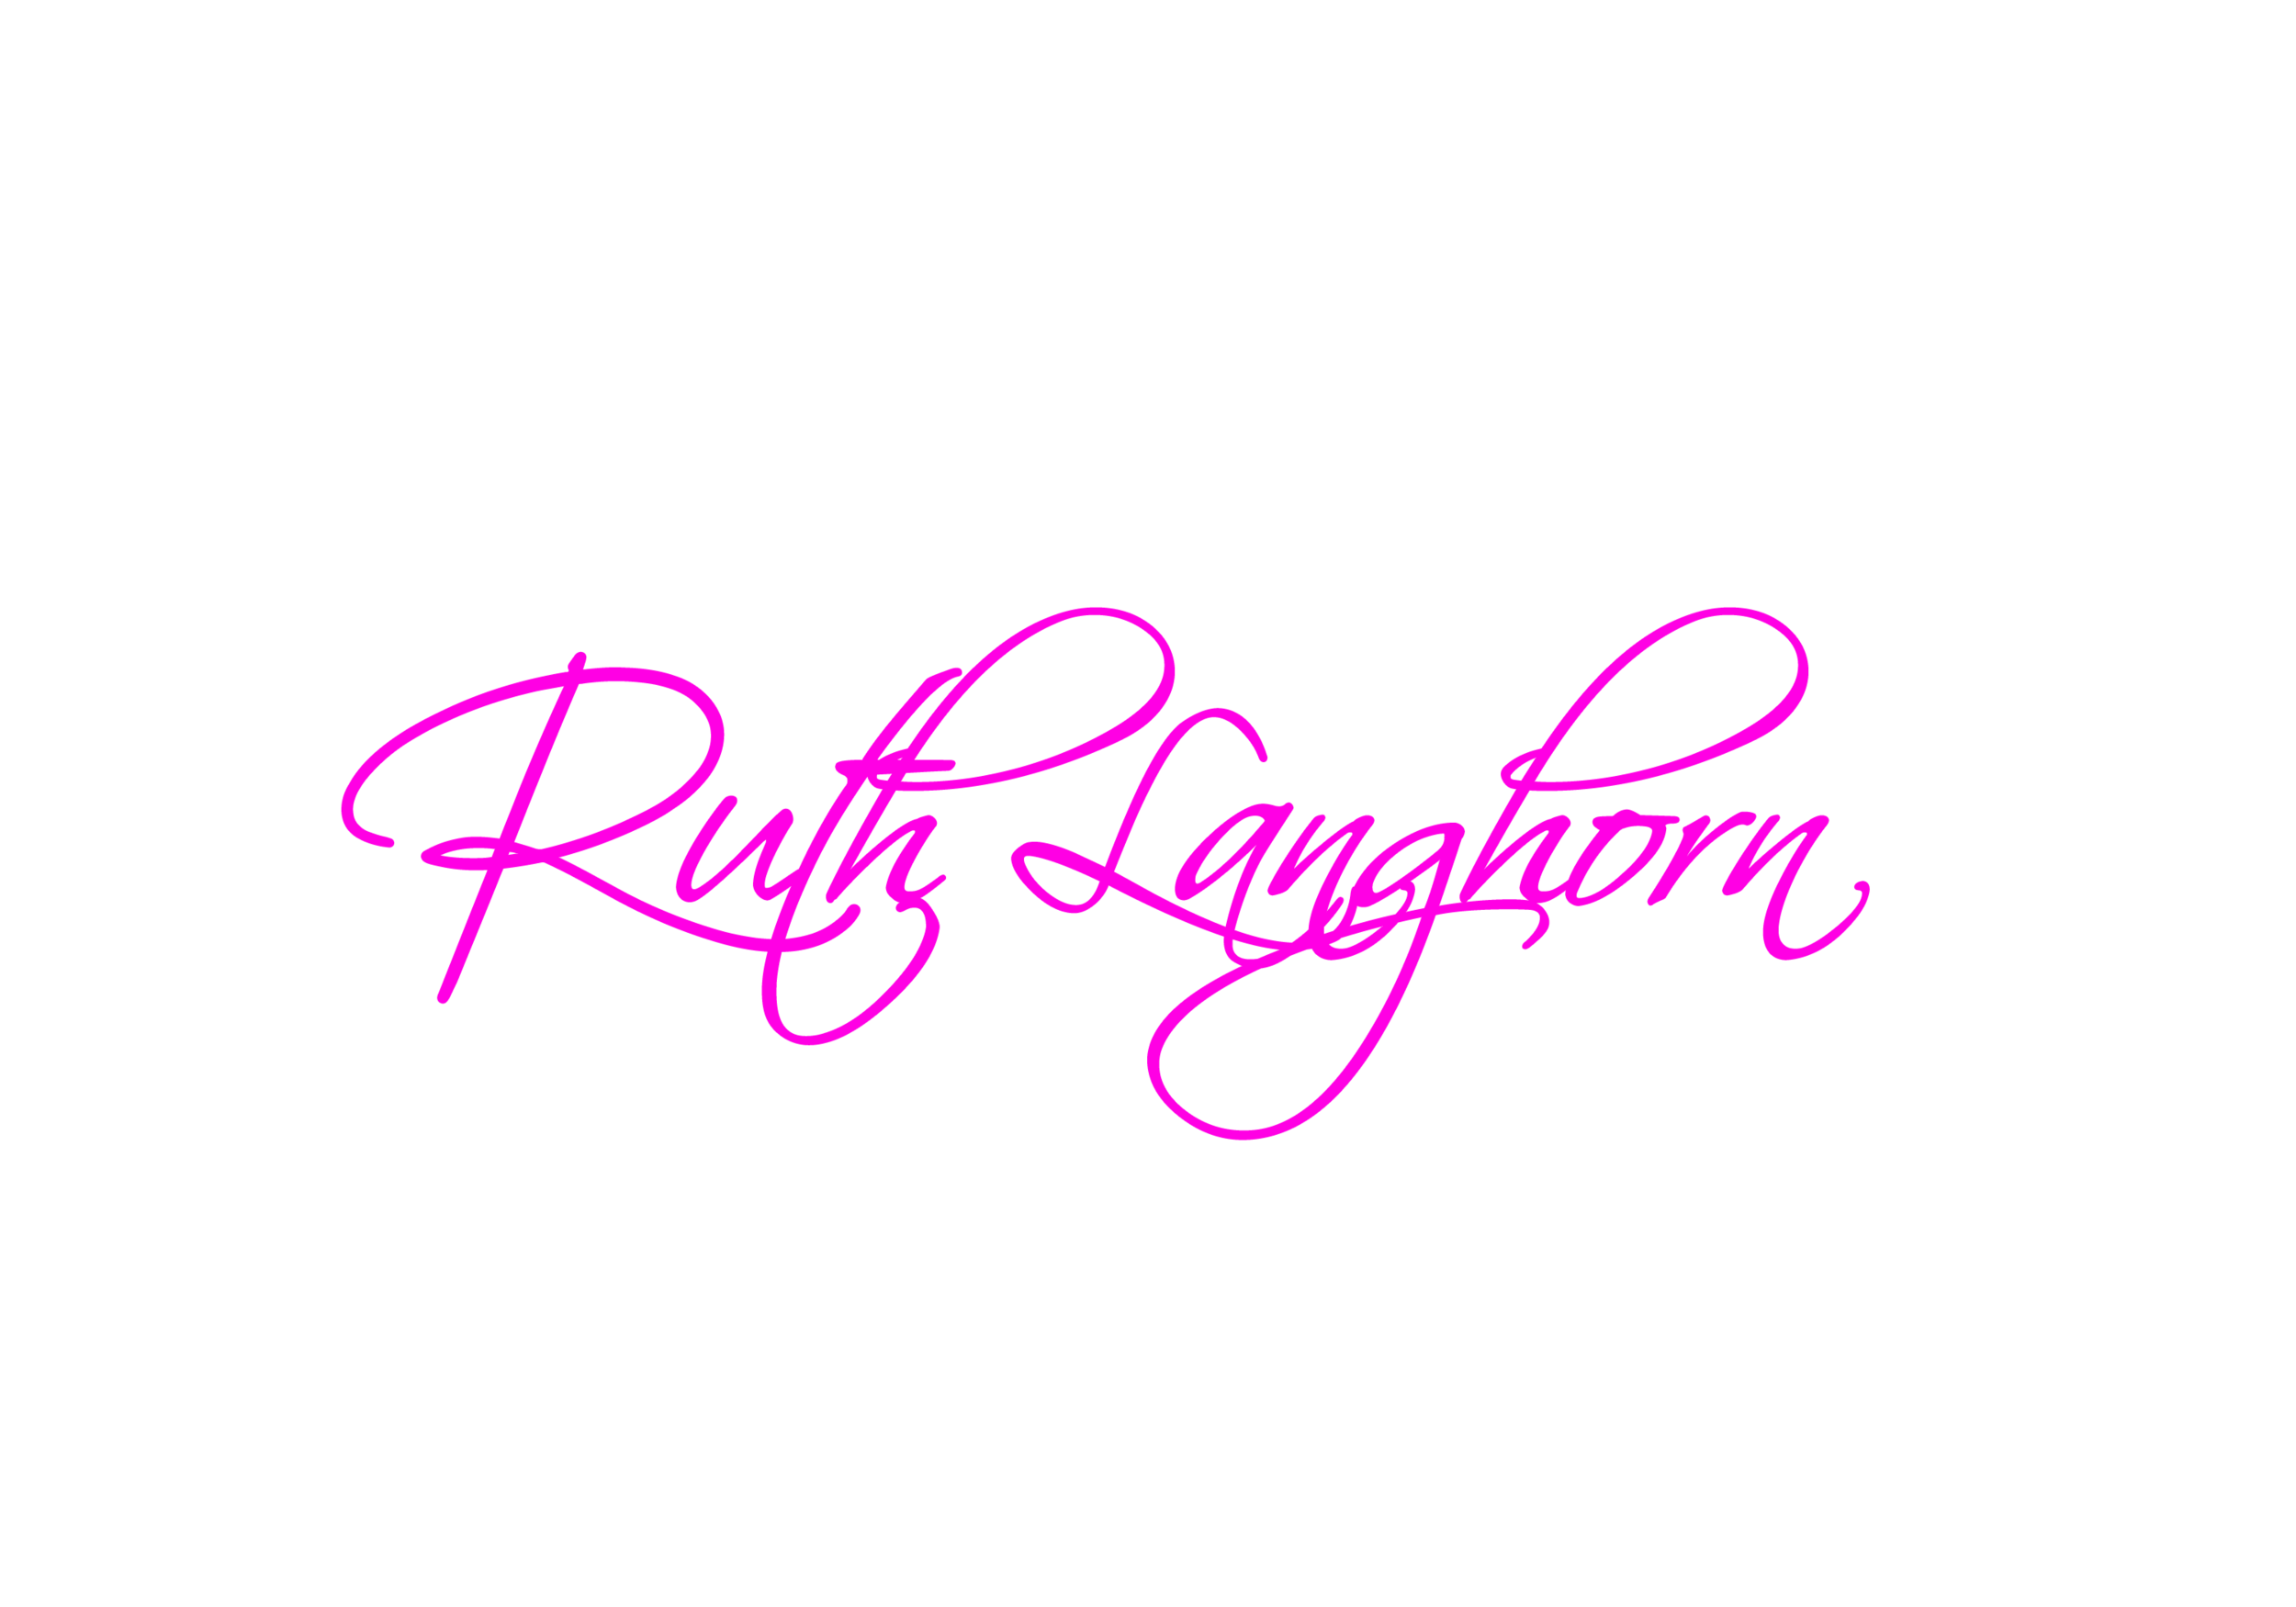 RUTH LANGHORN